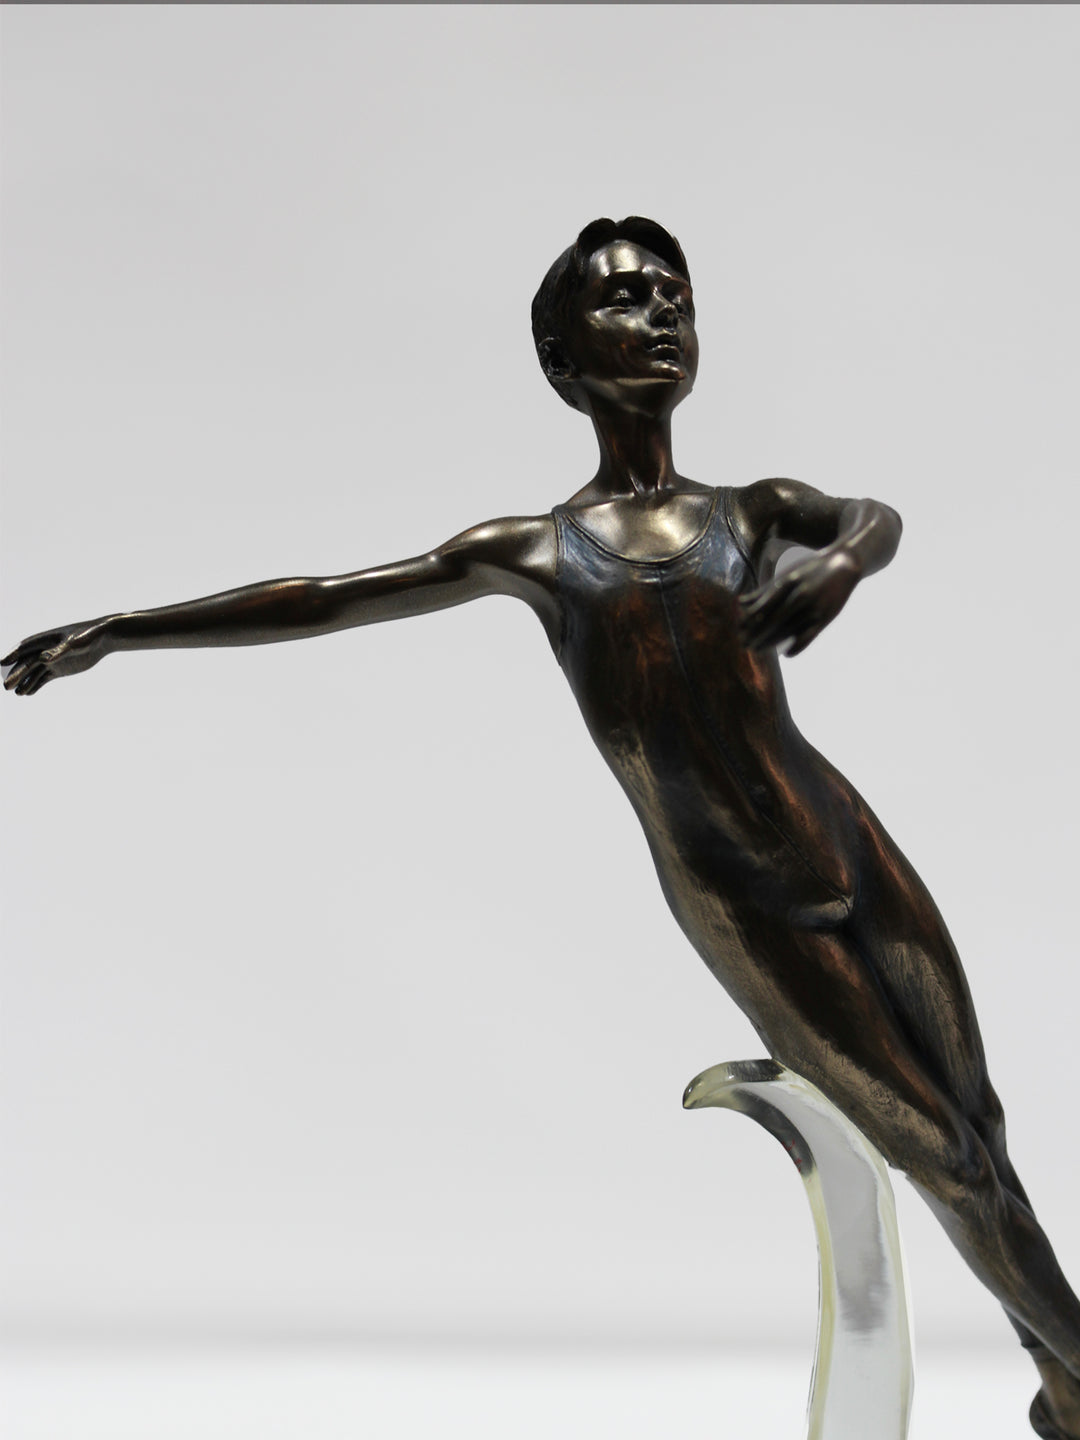 Male ballet dancer. ballerina male, boy dancing, bronze statues ballerina Swan Lake 